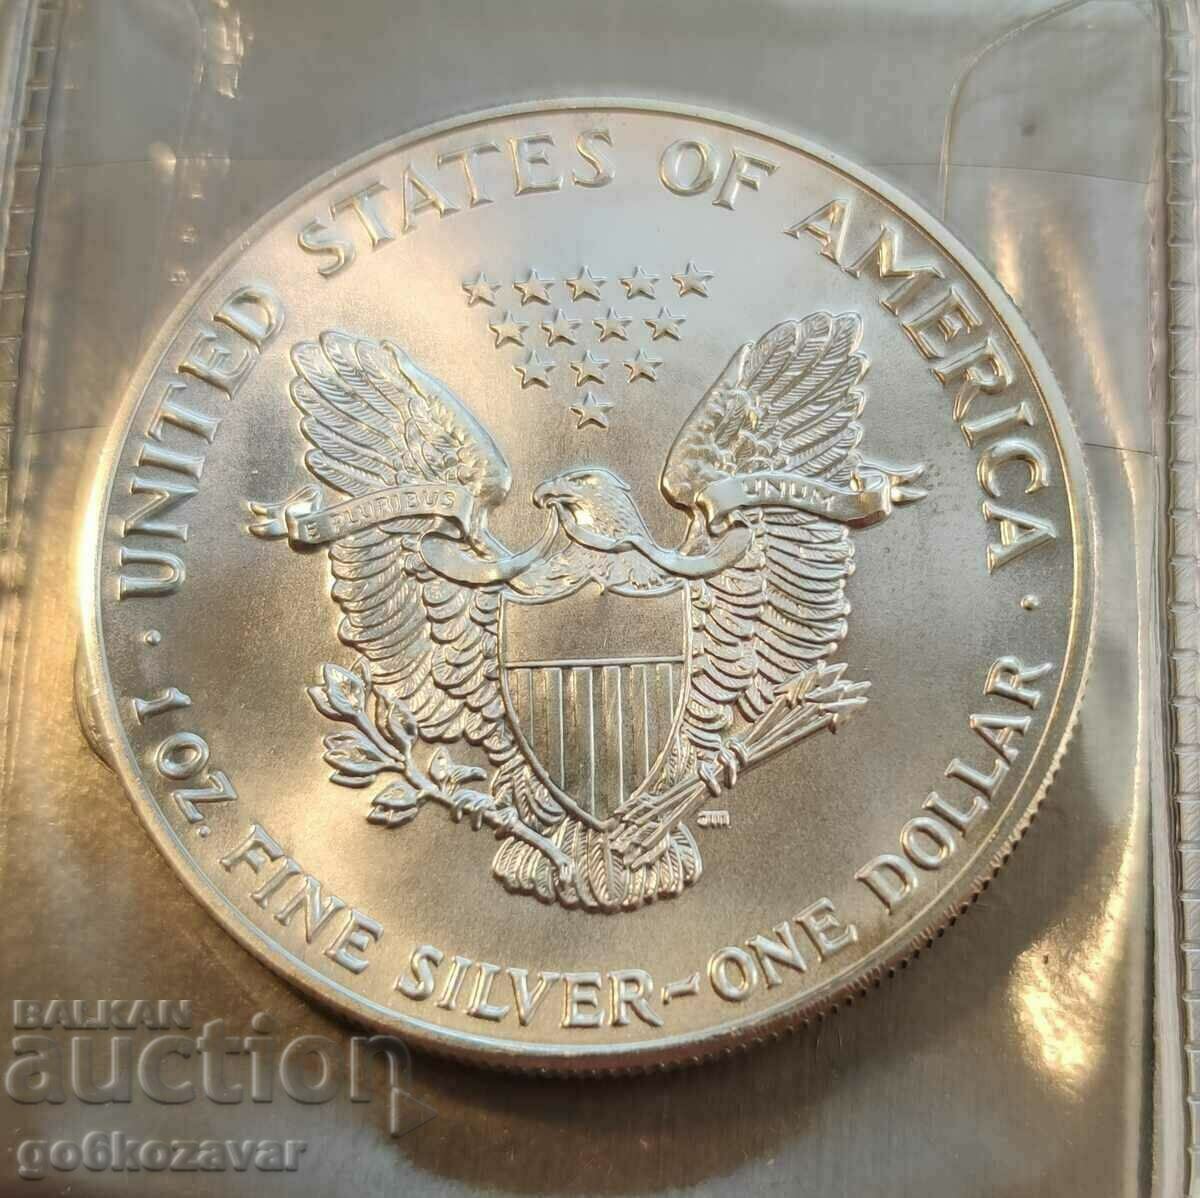 American Eagle 1 oz Silver 9,999 Ounce 1990 UNC Proof